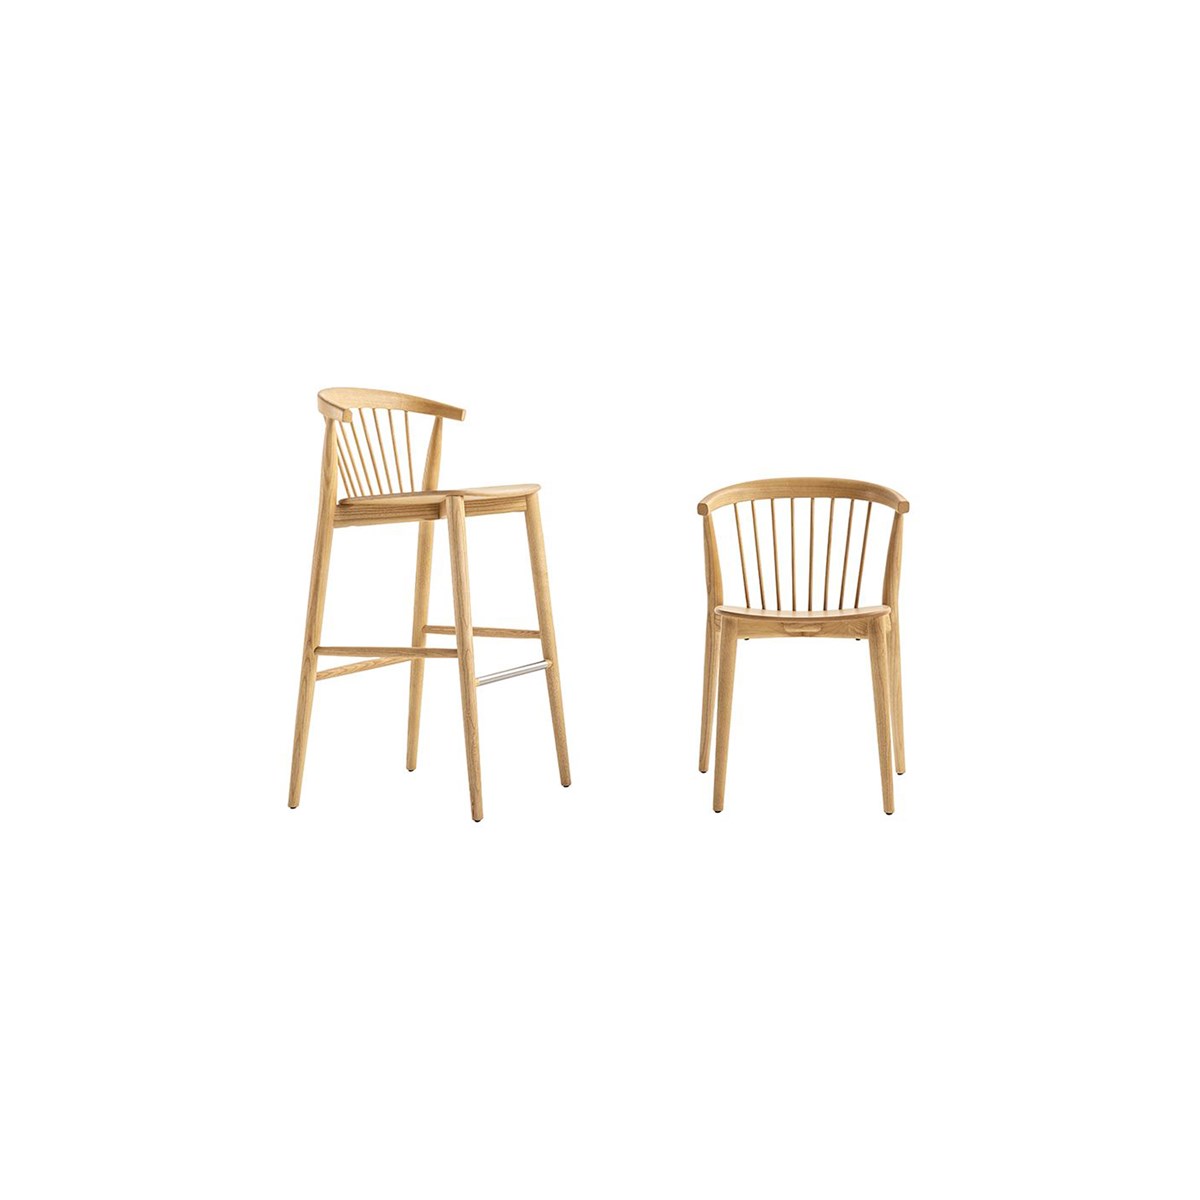 Newood Chairs2